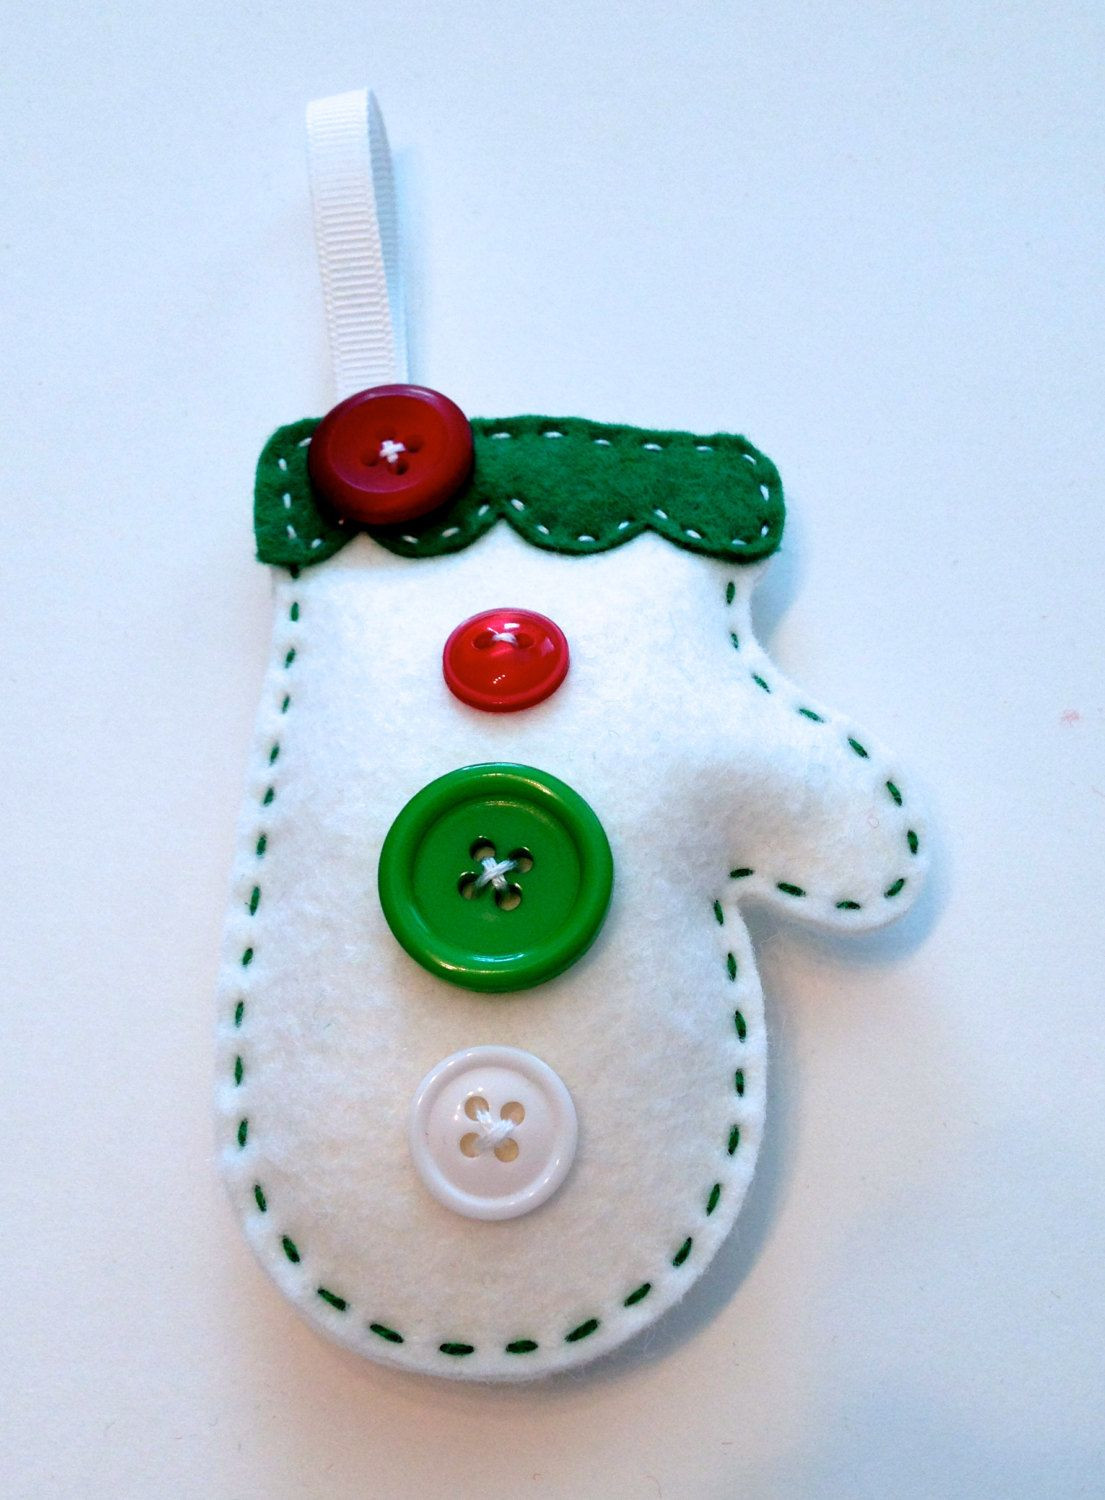 Best ideas about DIY Felt Ornaments
. Save or Pin Diy Button Mitten Felt Ornament KIT by PolkaDotCreek on Now.